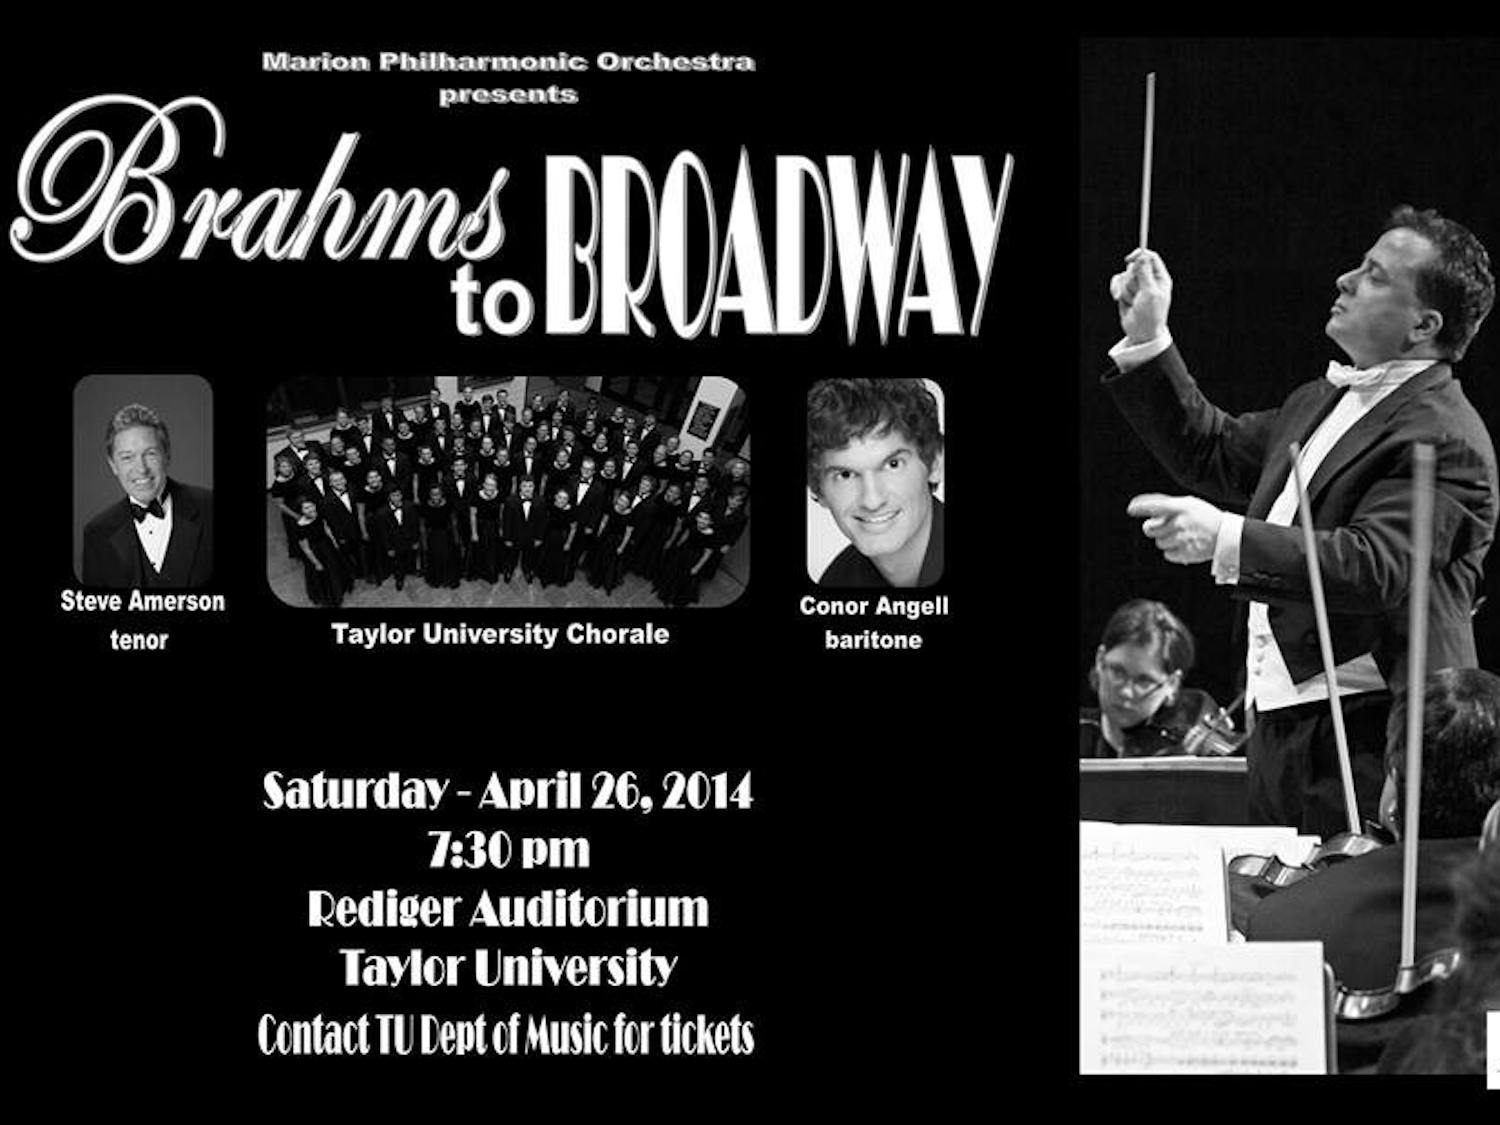 Brahms-to-Broadway.jpg